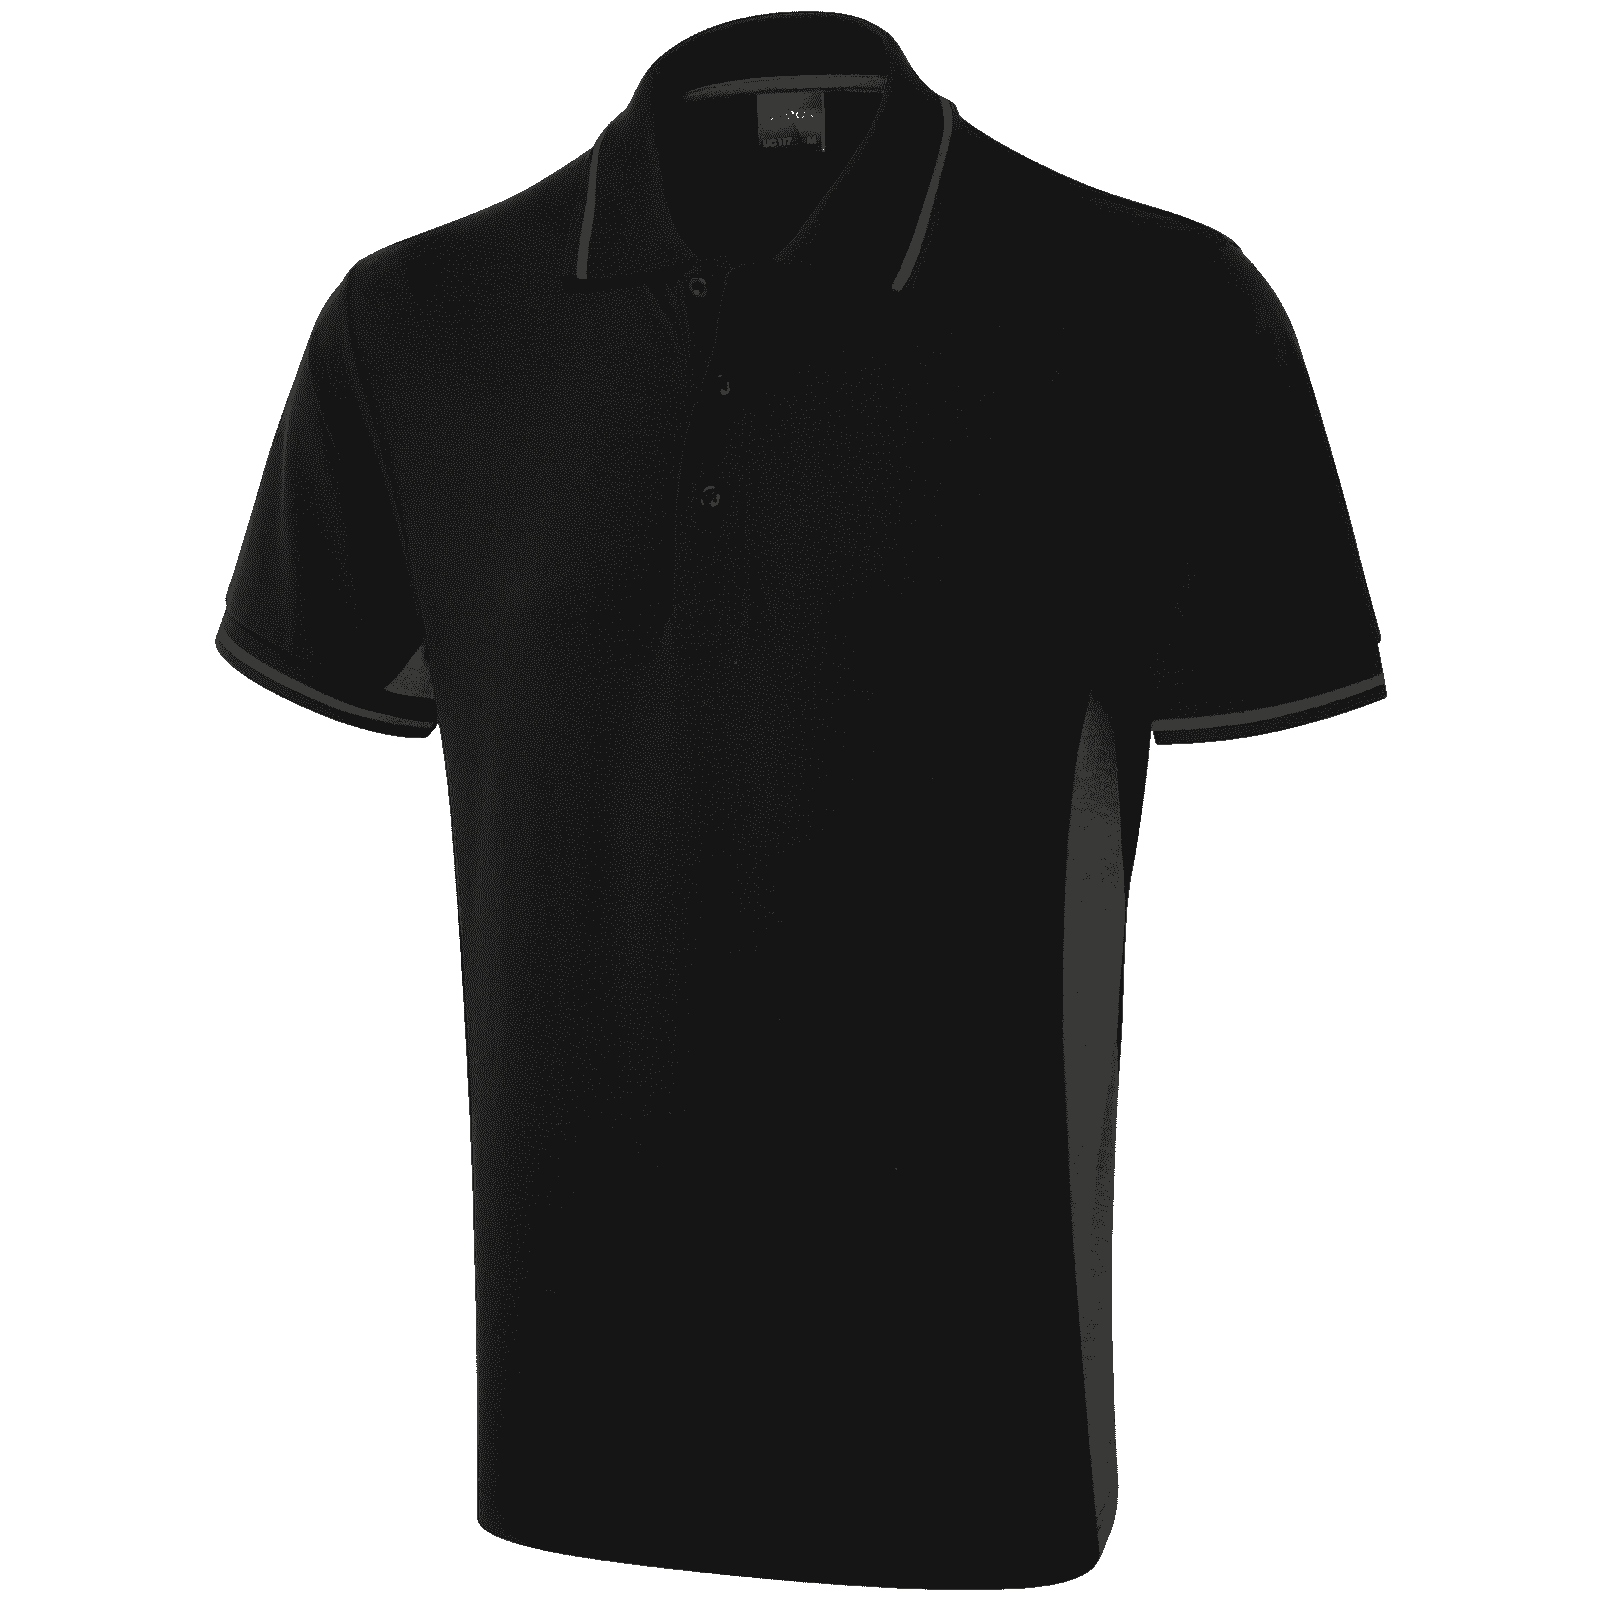 Two-Tone Polo Shirt Uneek UC117 Black/Charcoal